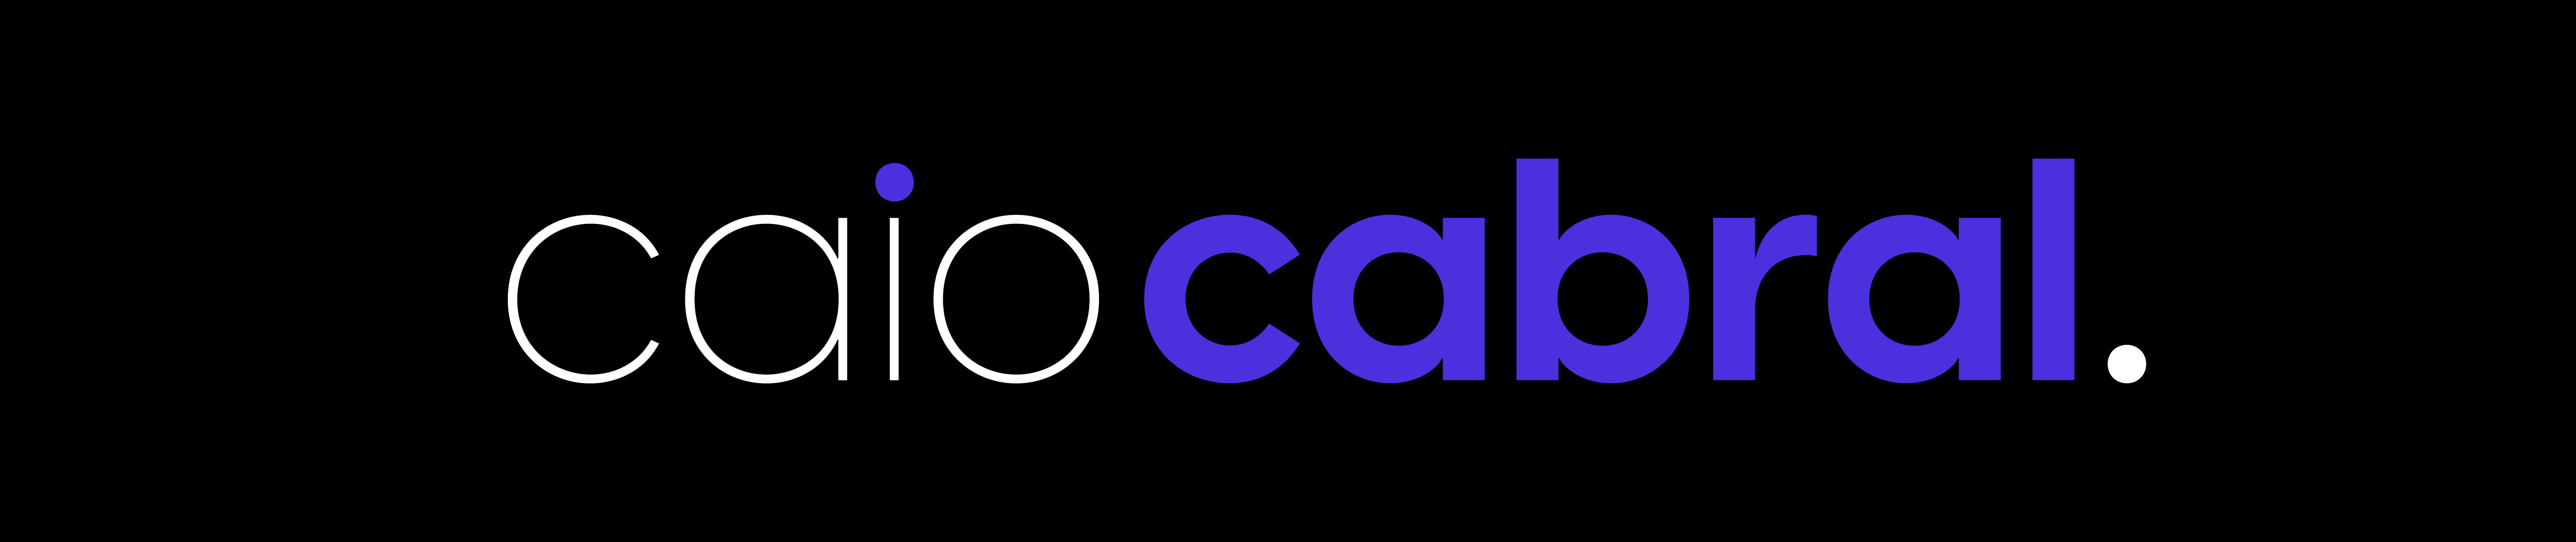 Caio Cabral's profile banner